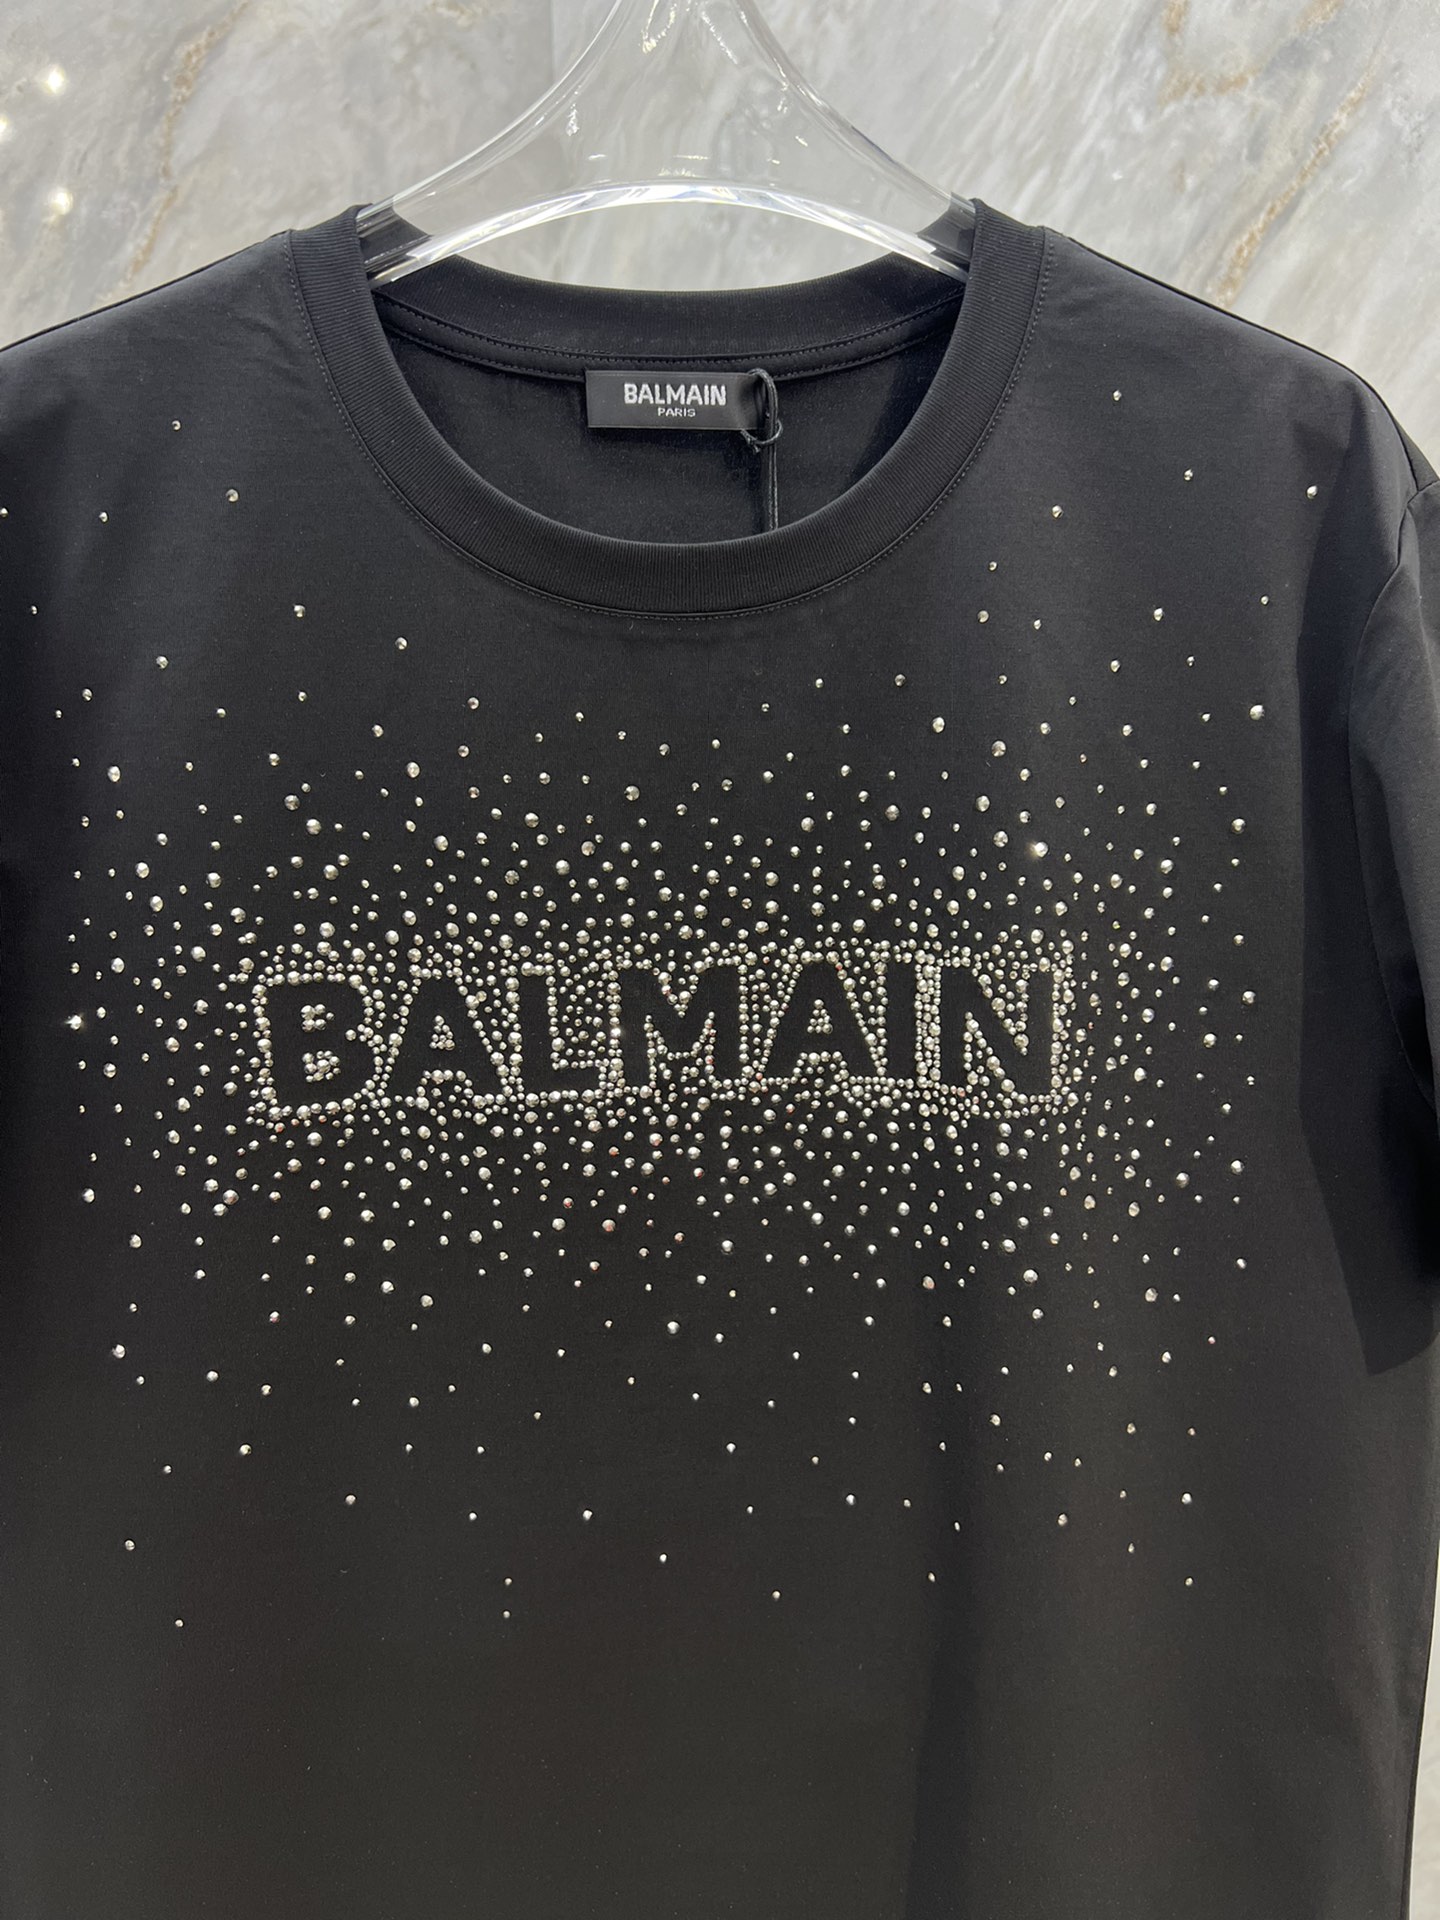 BALMAIN/巴尔曼24ss新款男装复古徽标水晶缀饰棉质短袖T恤正面水晶装饰彰显巴尔曼品牌格调演绎品牌